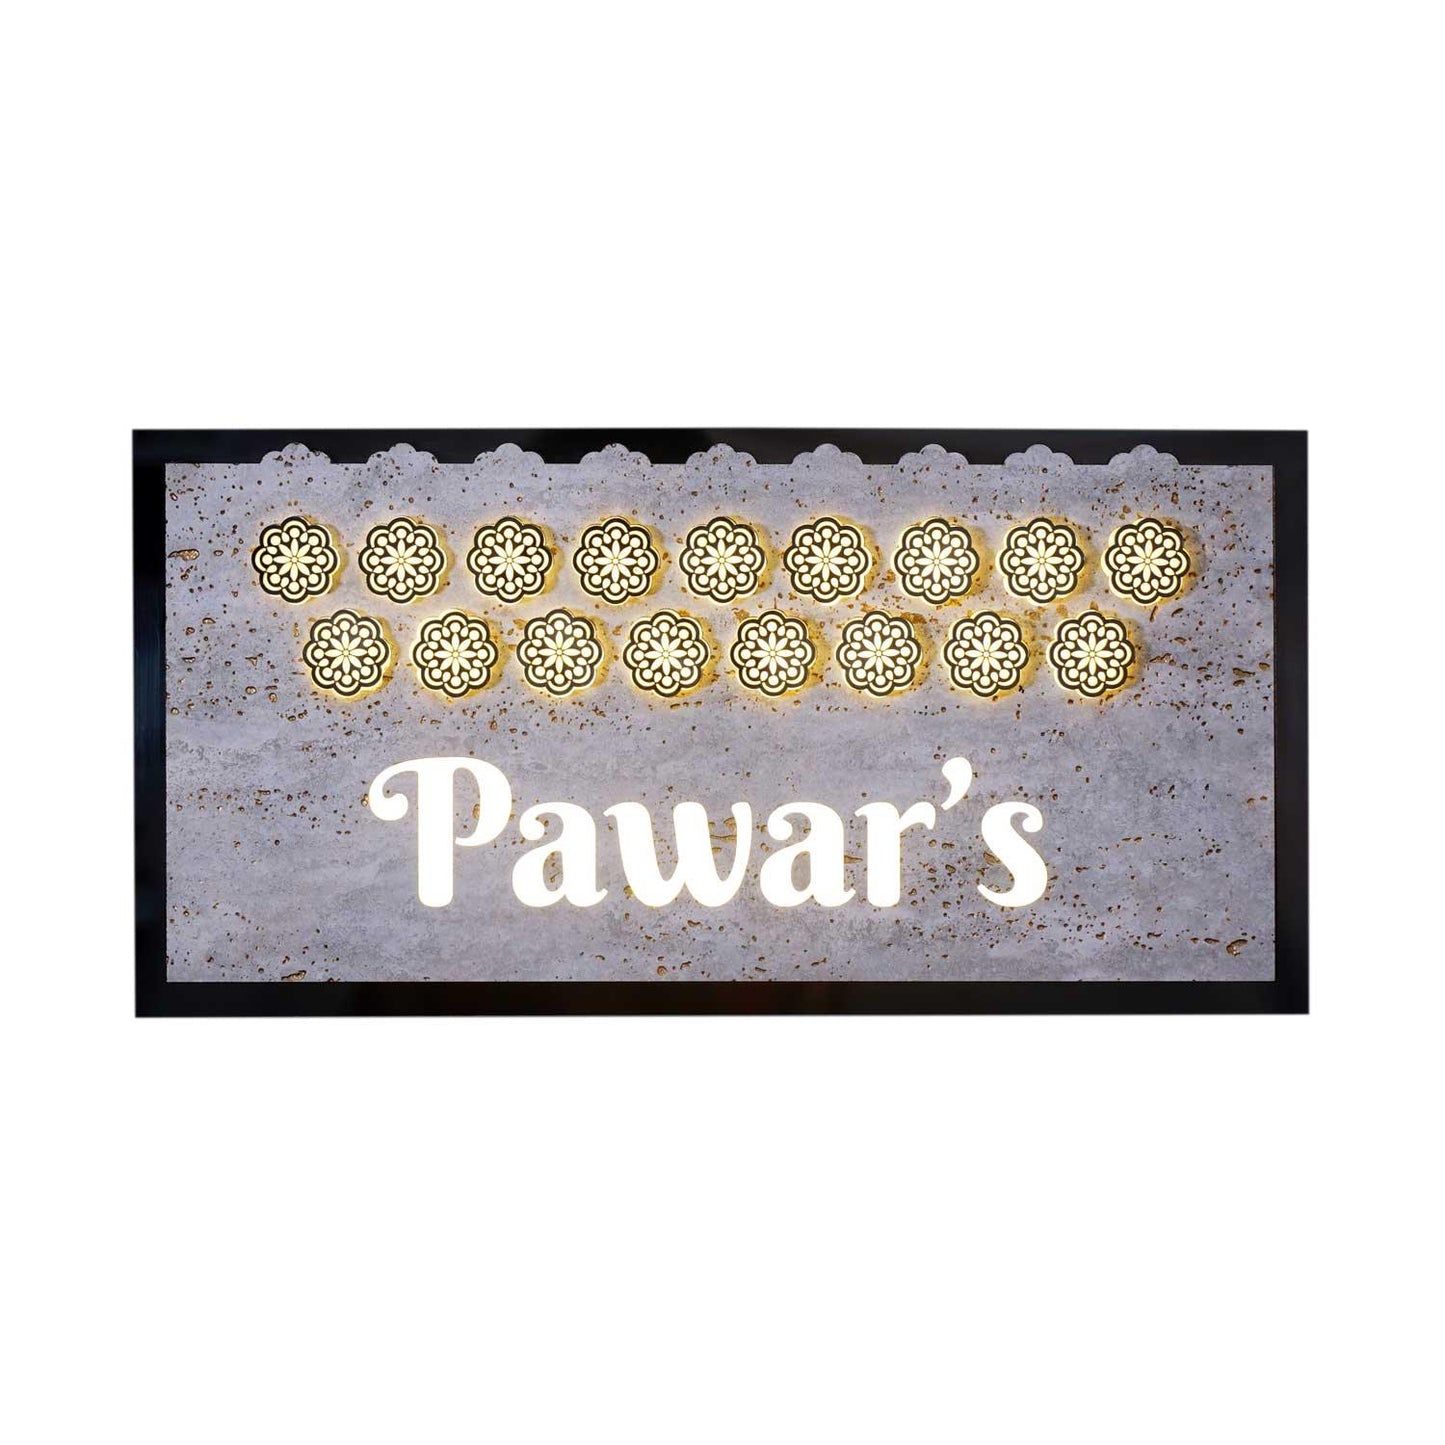 Pawar - Decorative LED Name Plate - Housenama